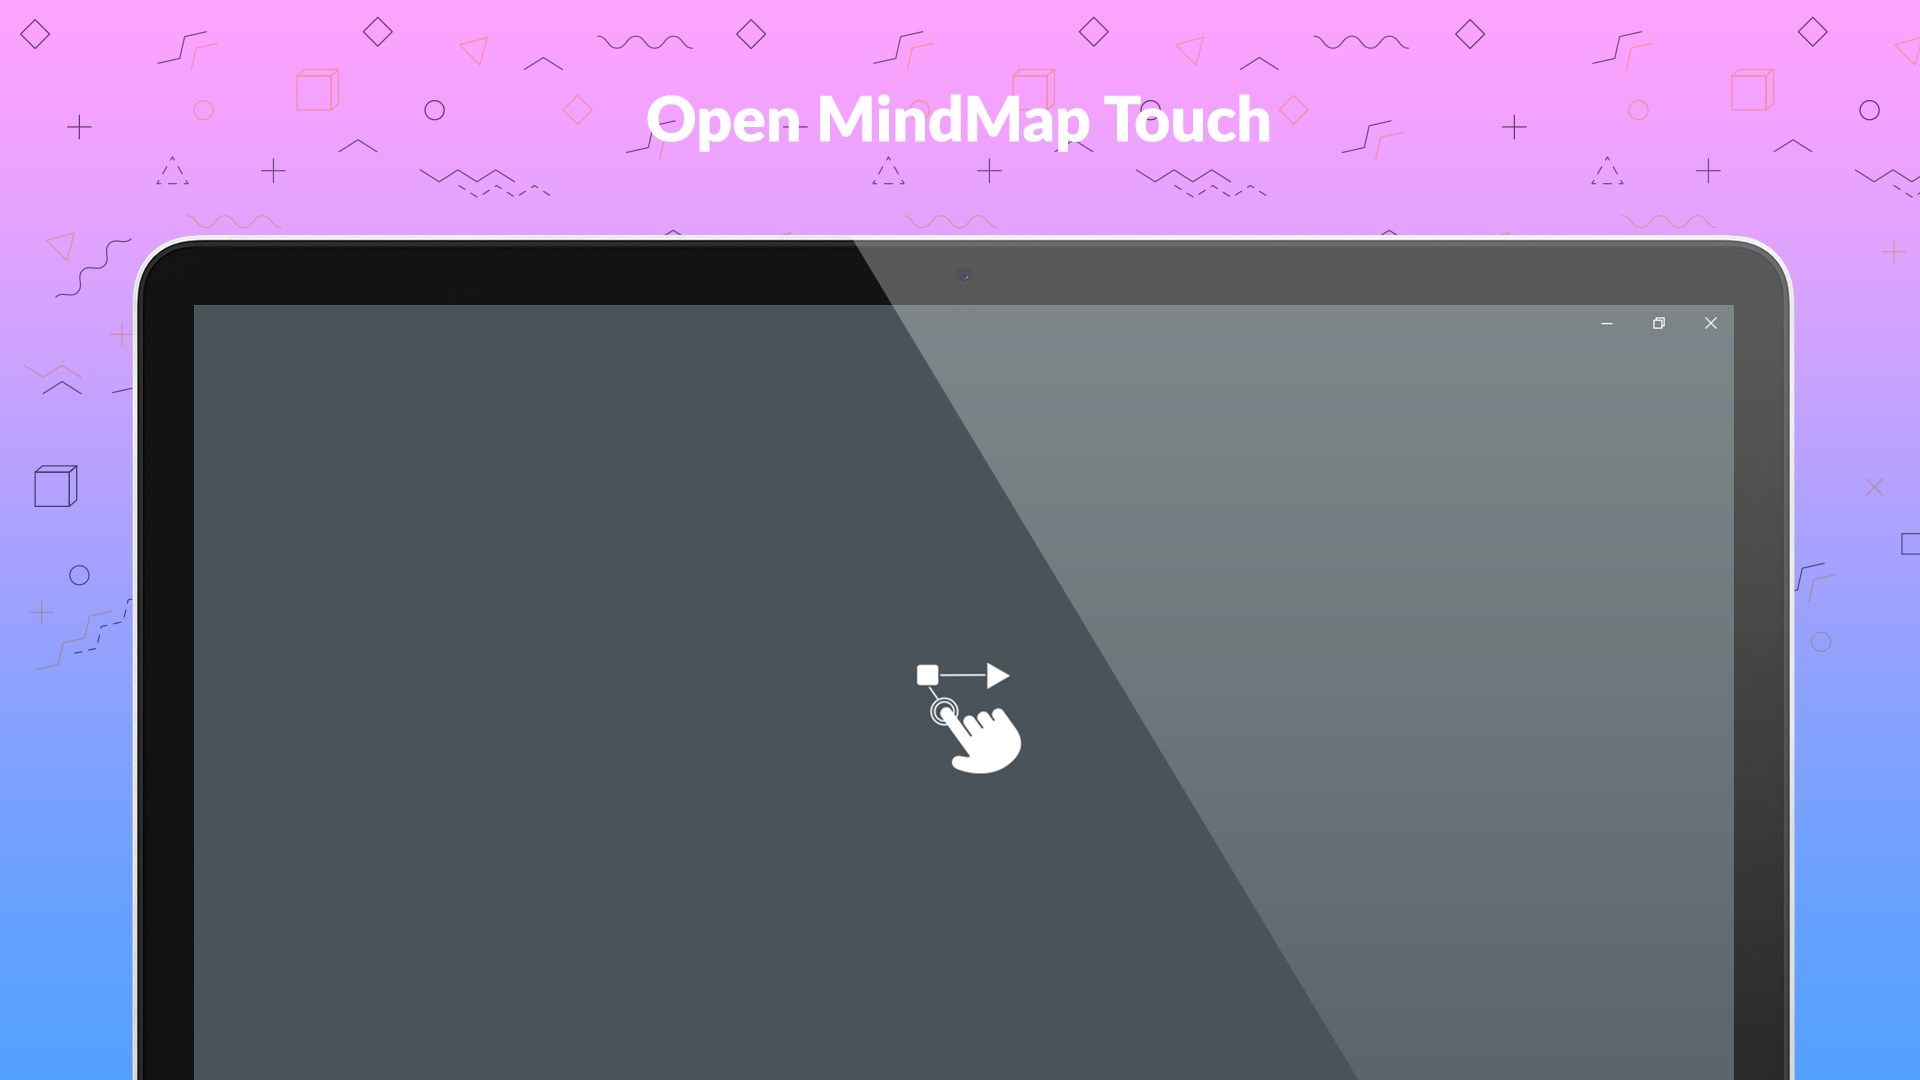 Open MindMap Touch